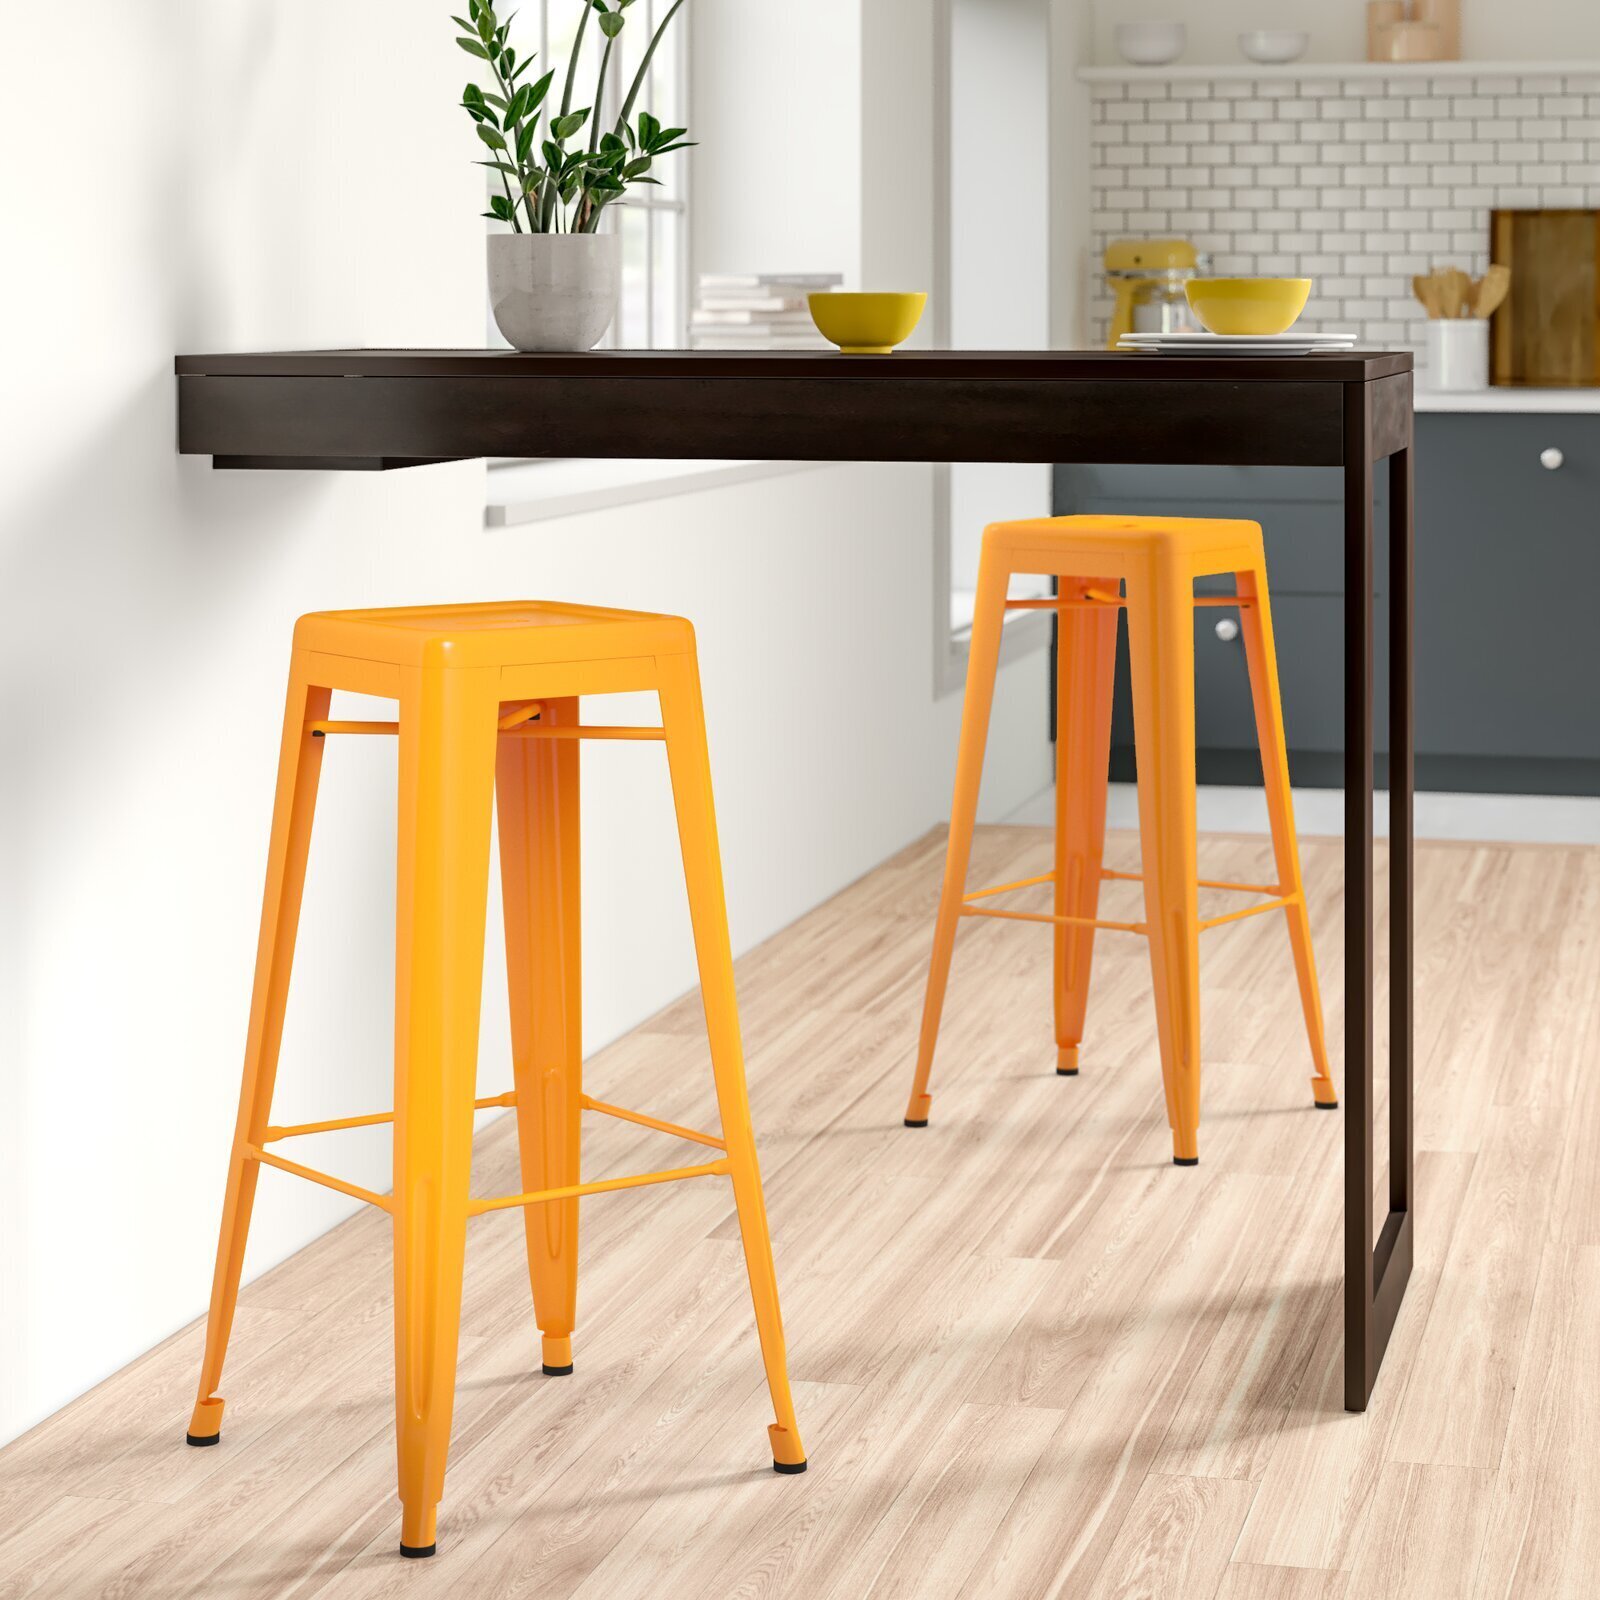 Iconic industrial orange bar stools